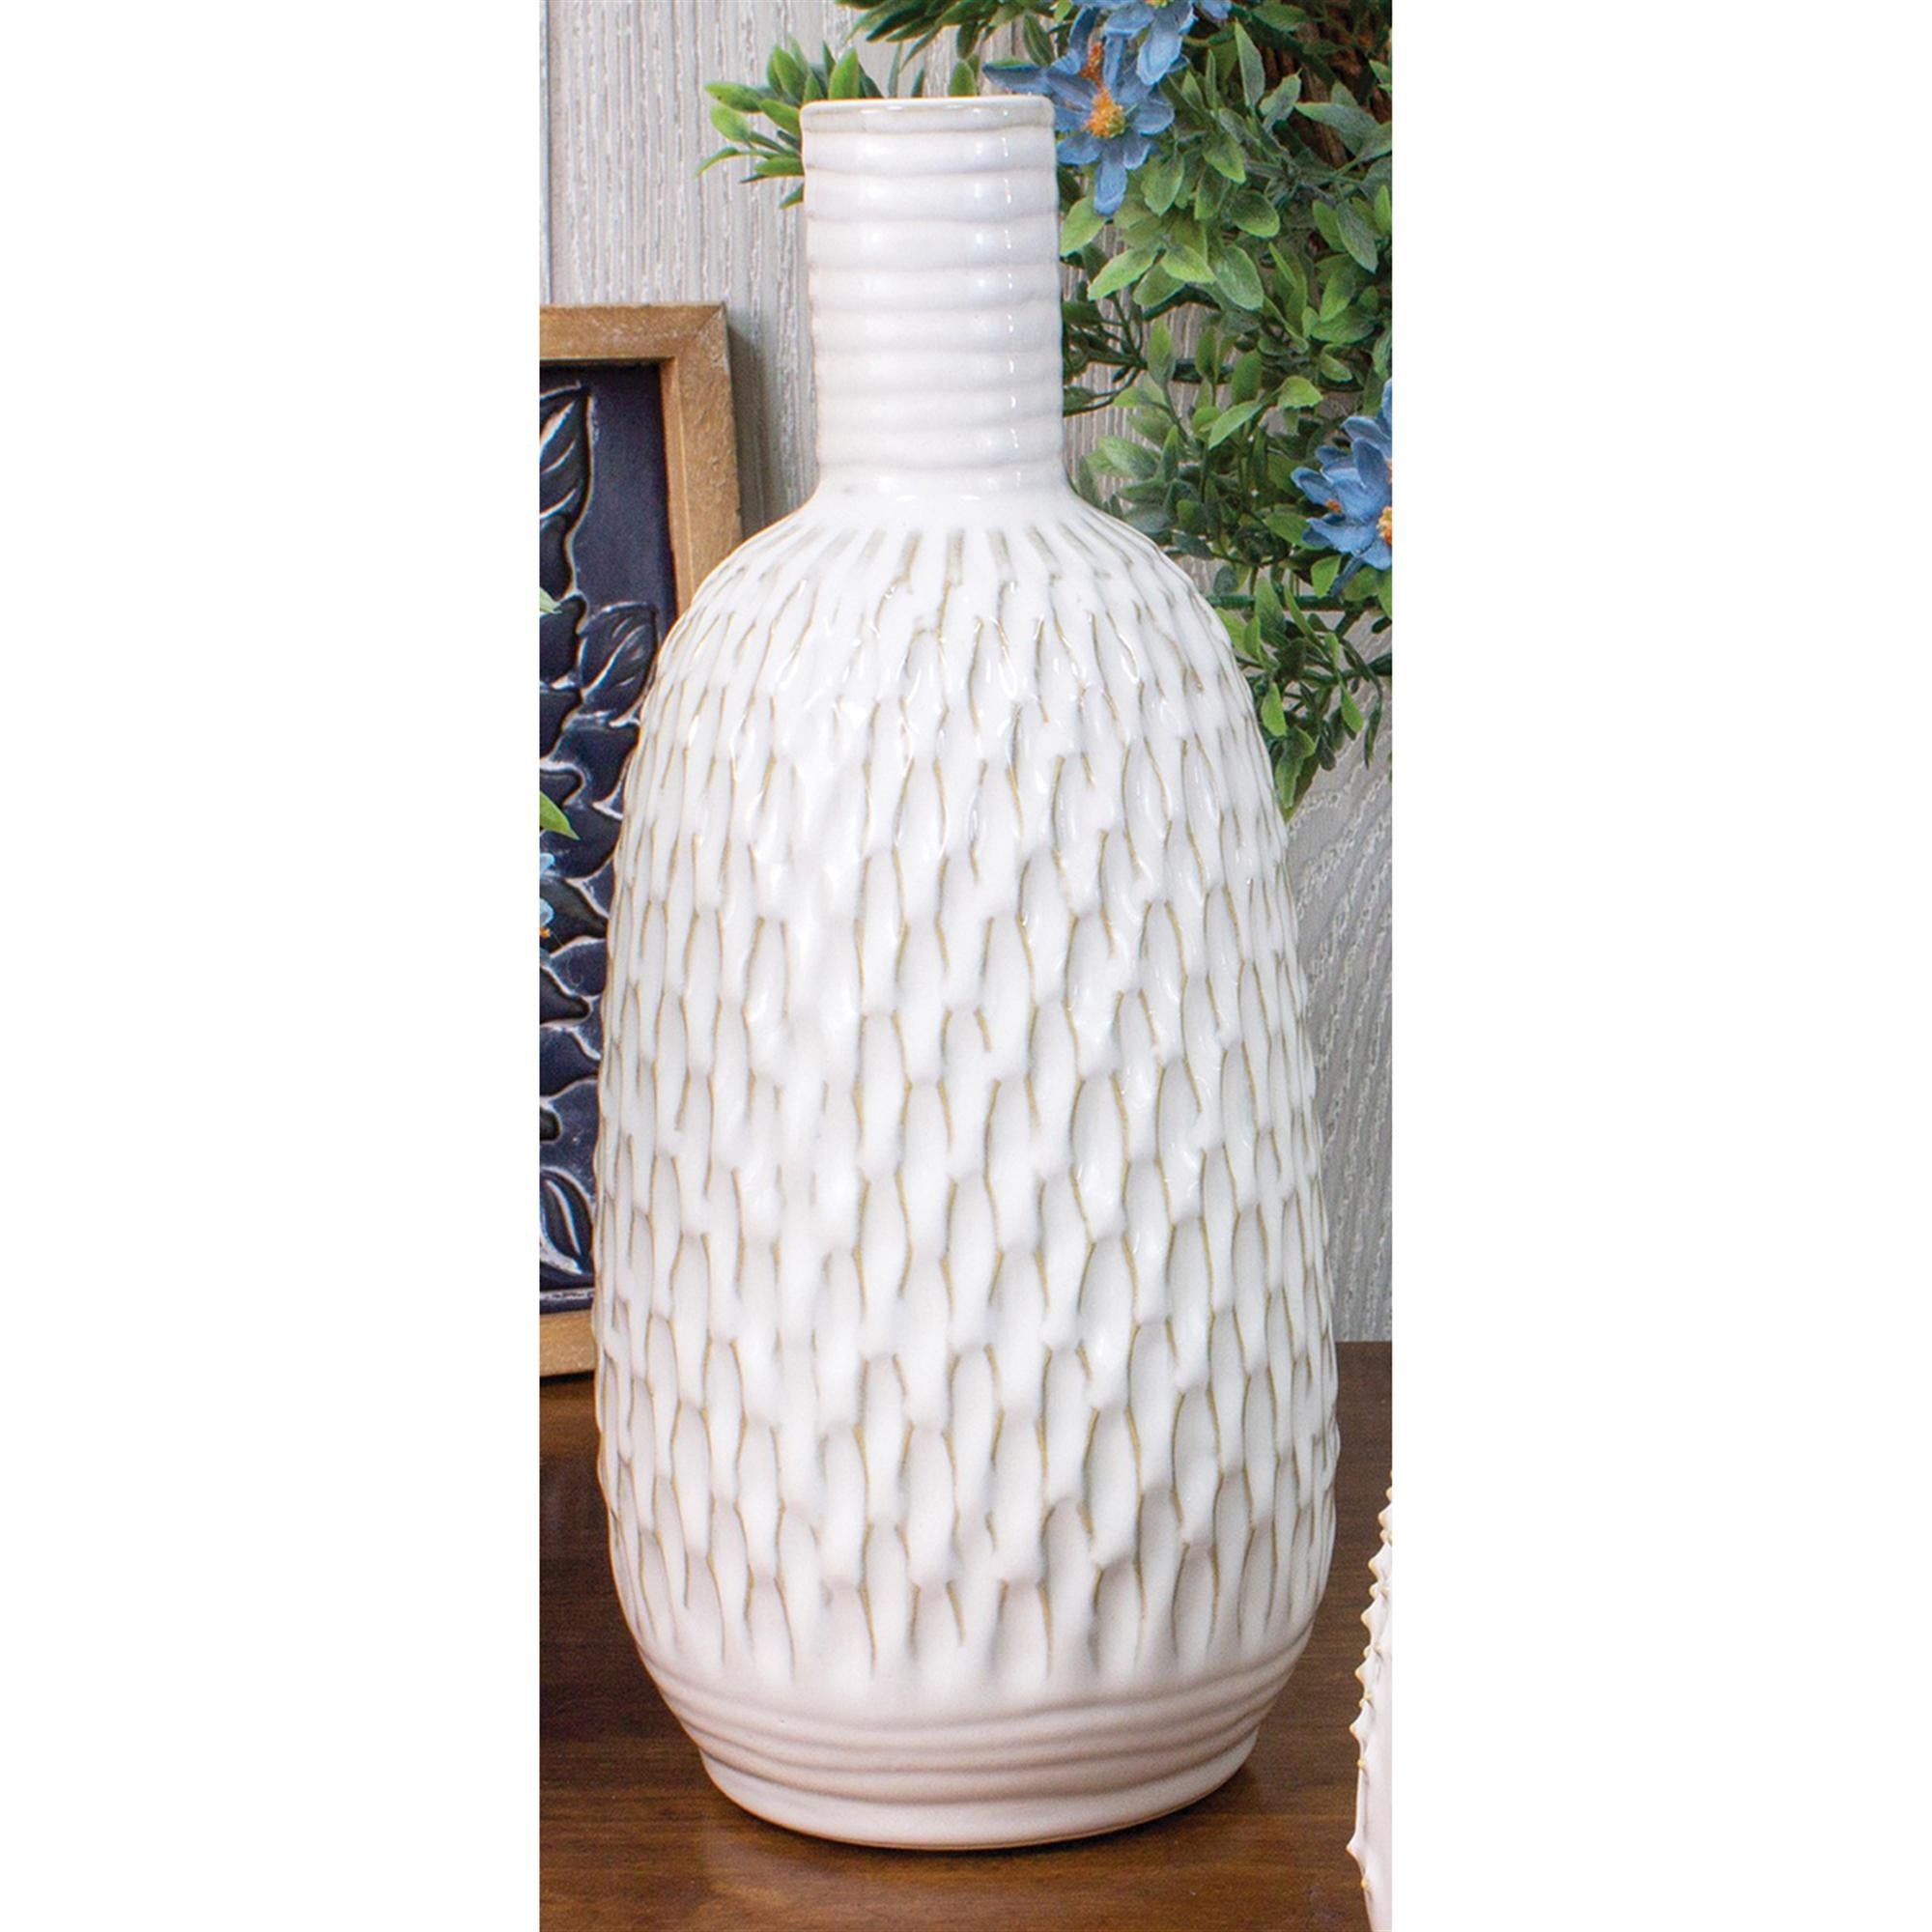 White Textured Vase - 10.5"H